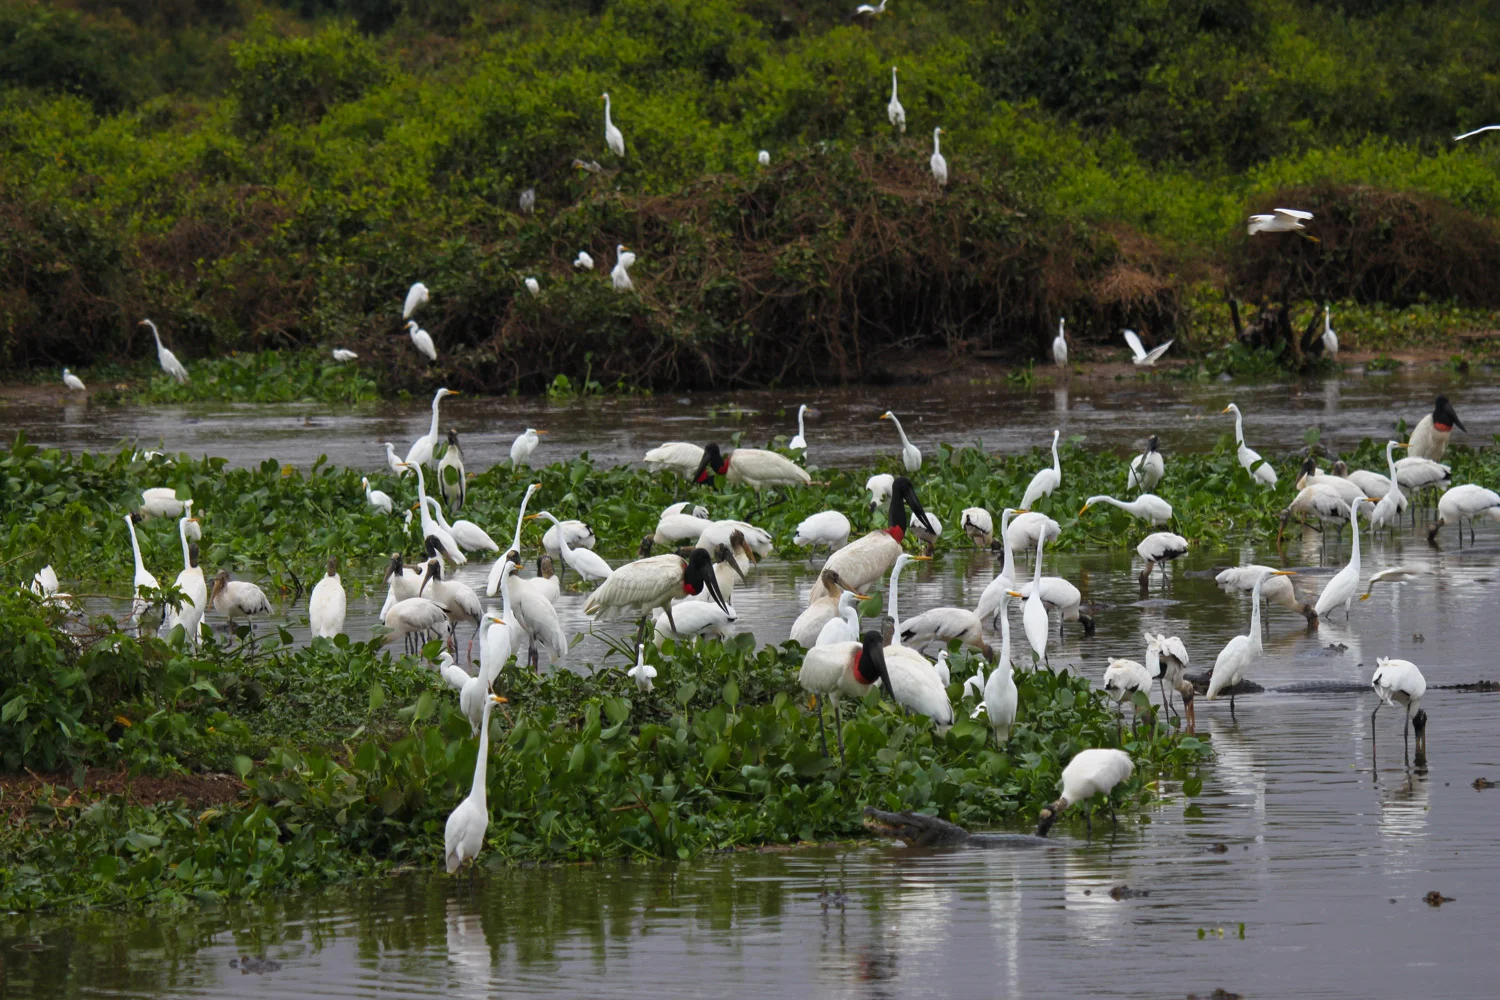 Typical Pantanal scene